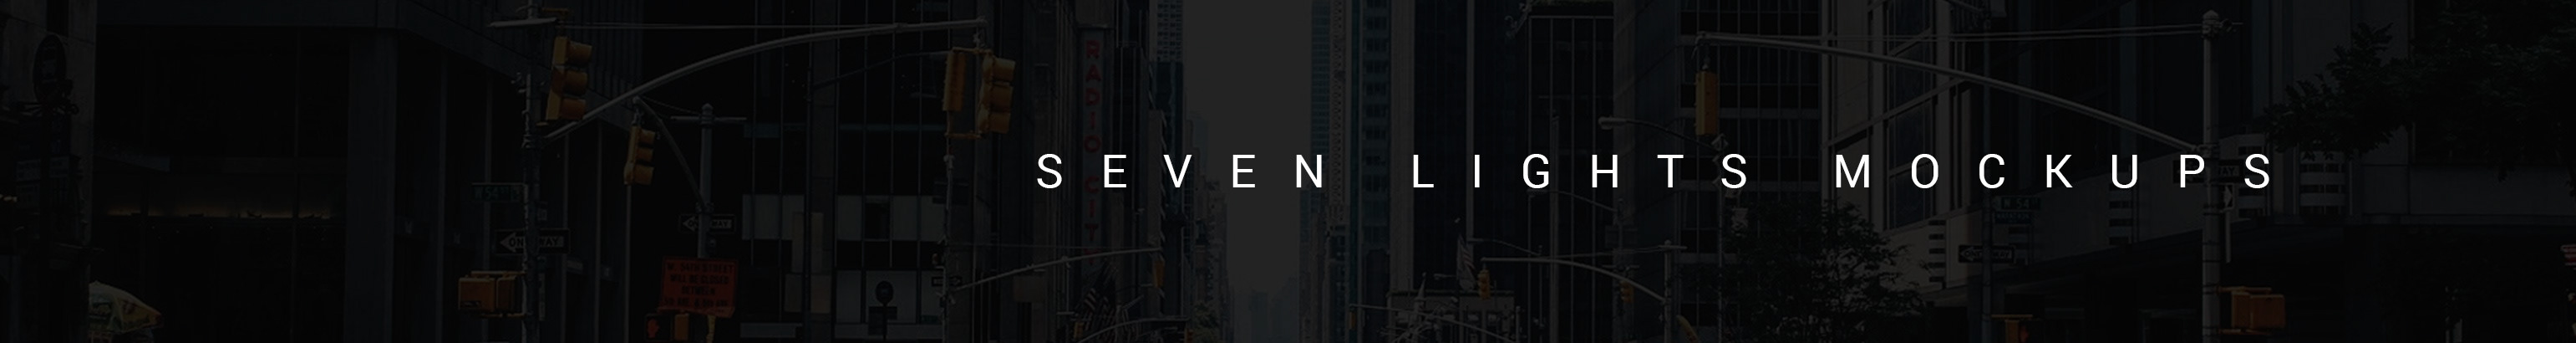 Seven Lights's profile banner